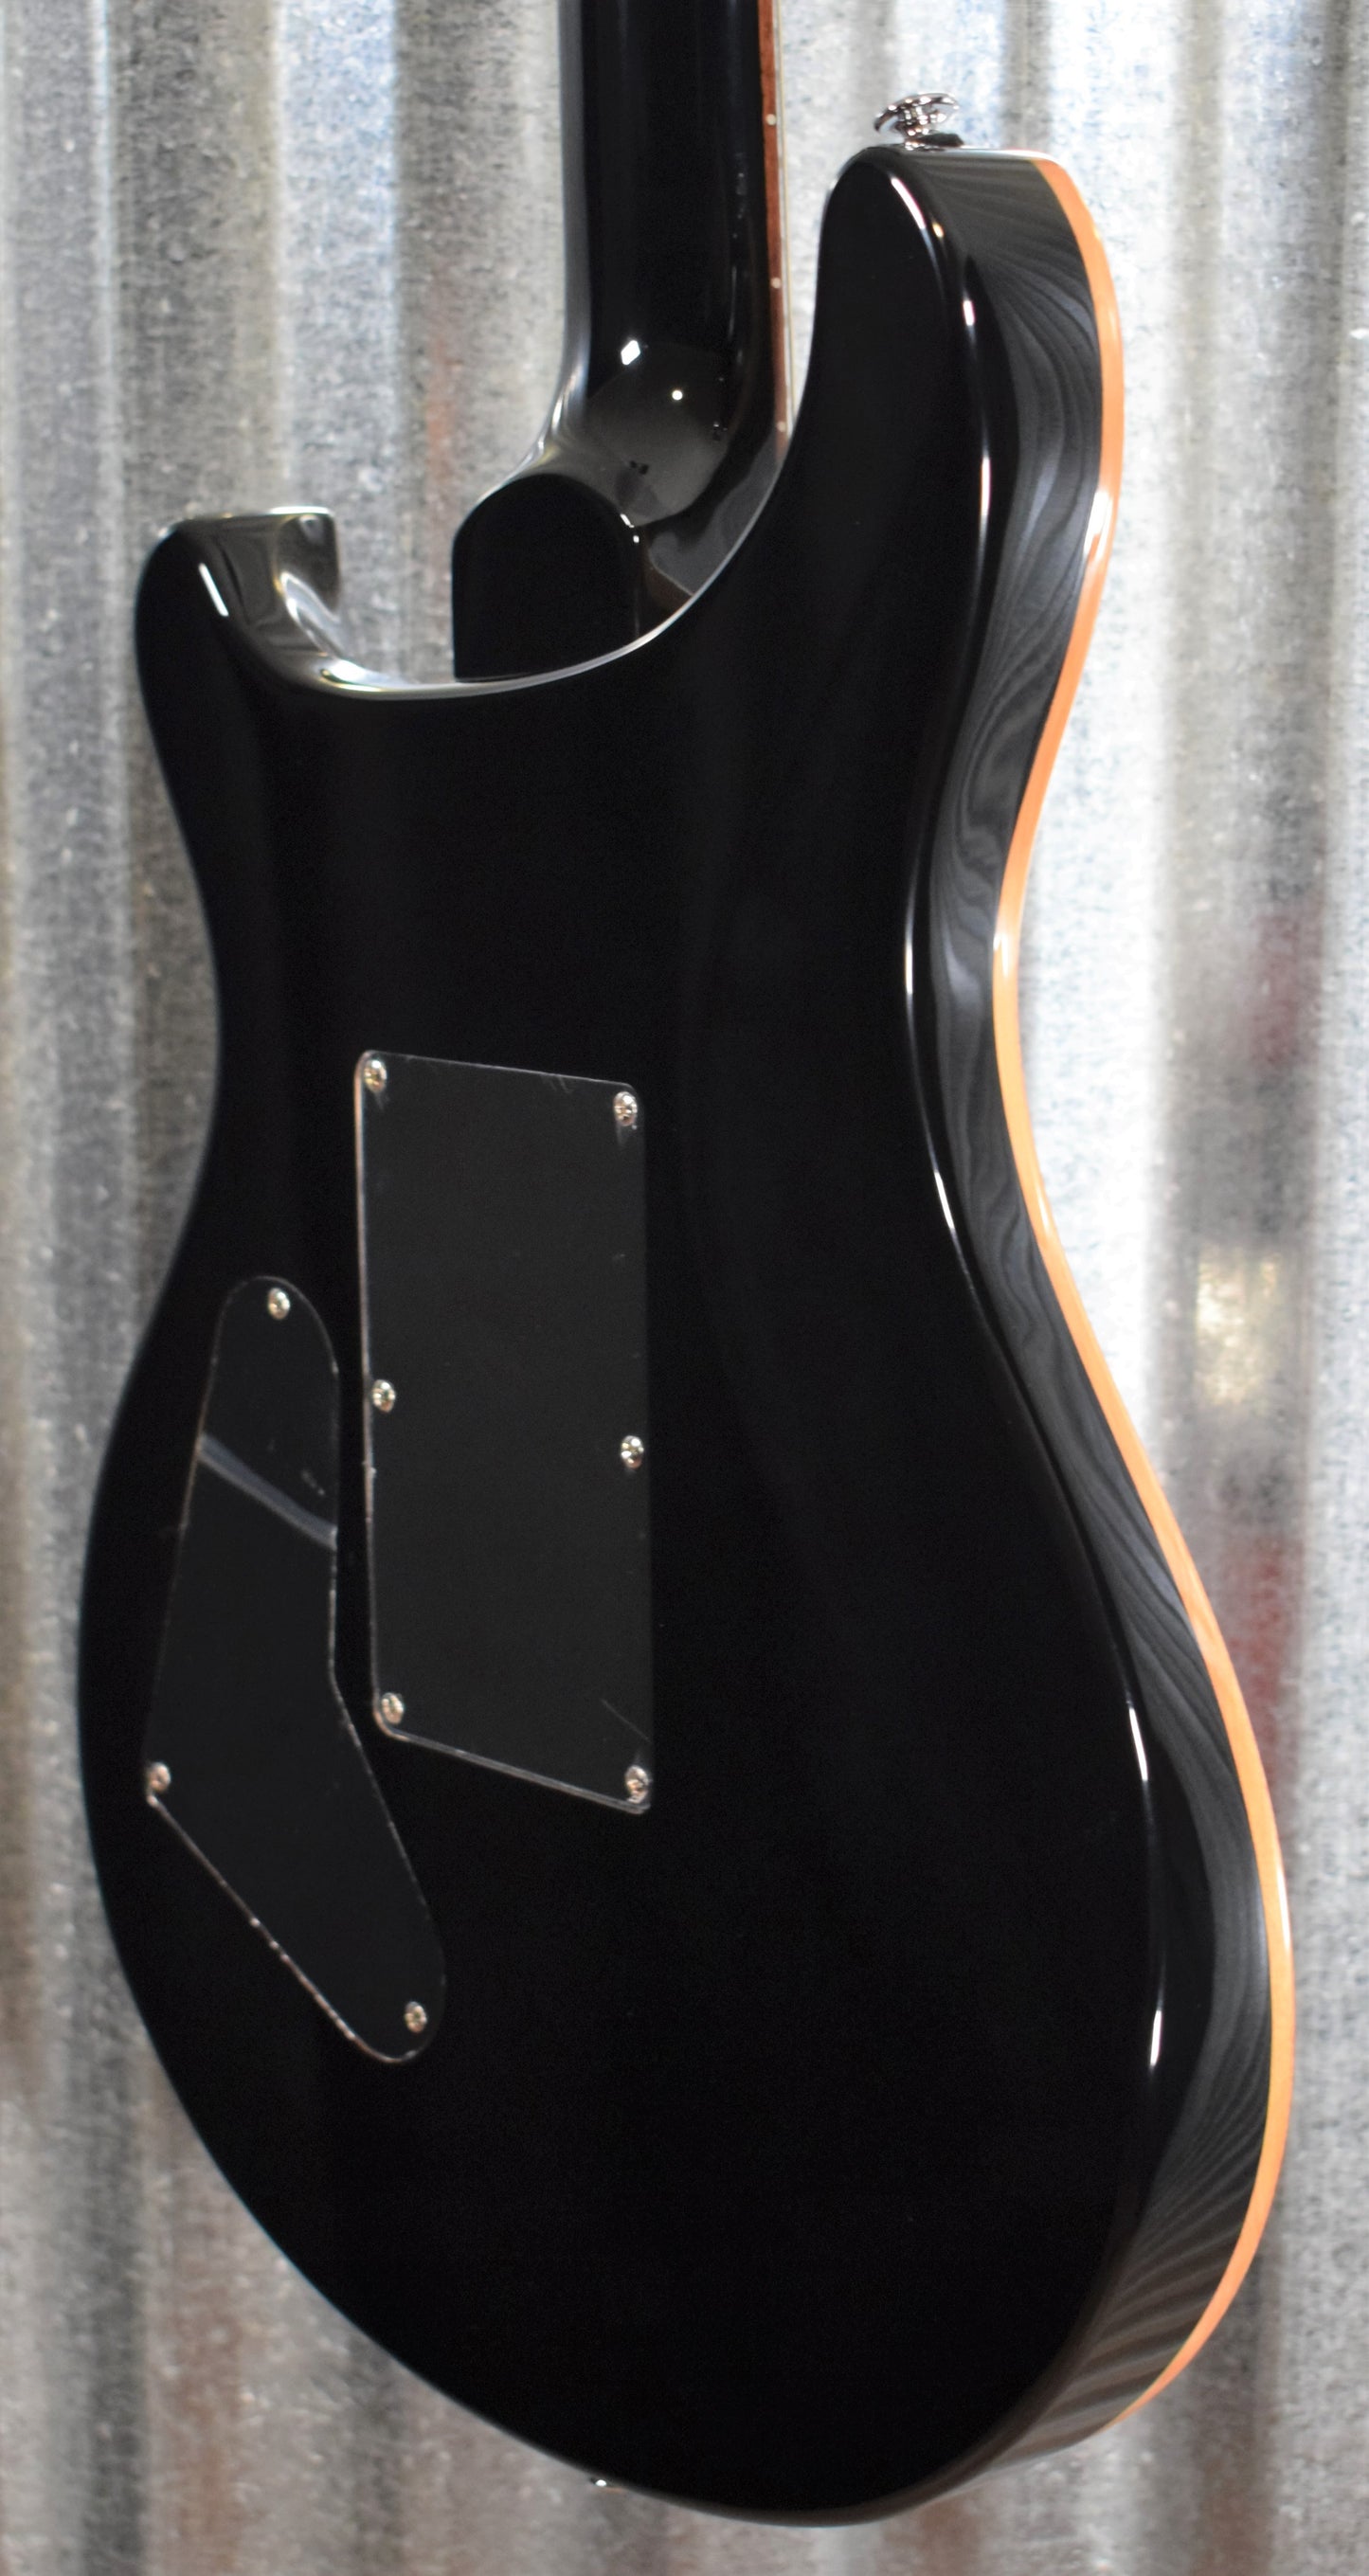 PRS Paul Reed Smith SE Custom 24 Floyd Fire Red Burst Guitar & Bag #1309